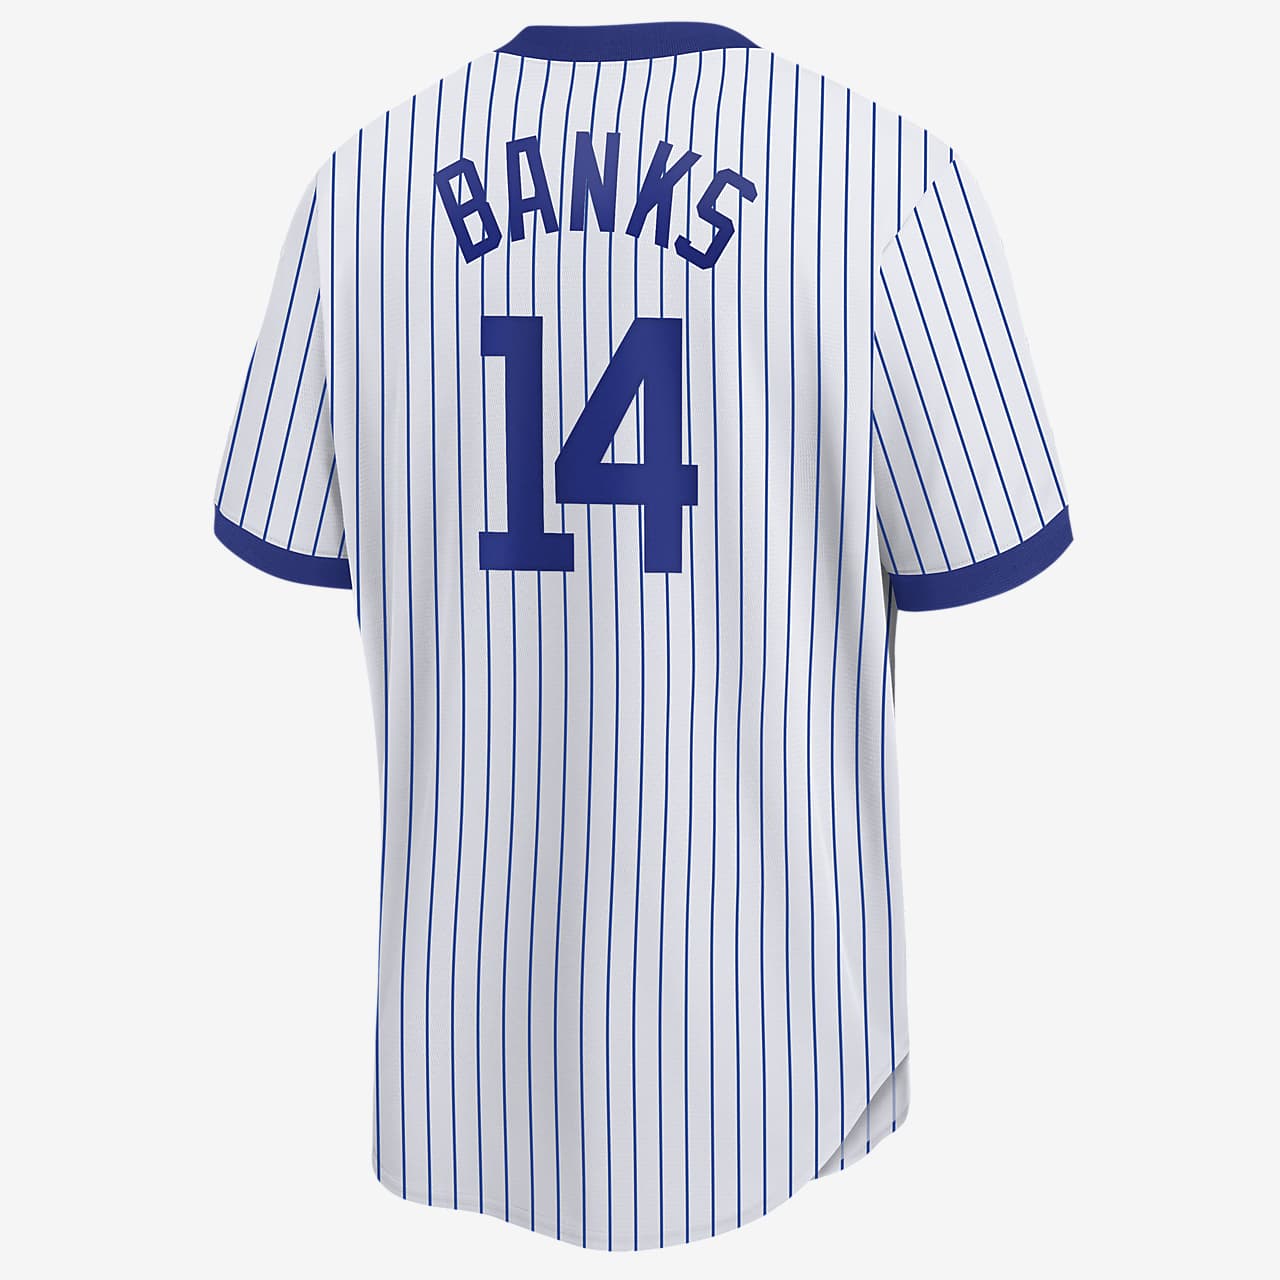 ernie banks baseball